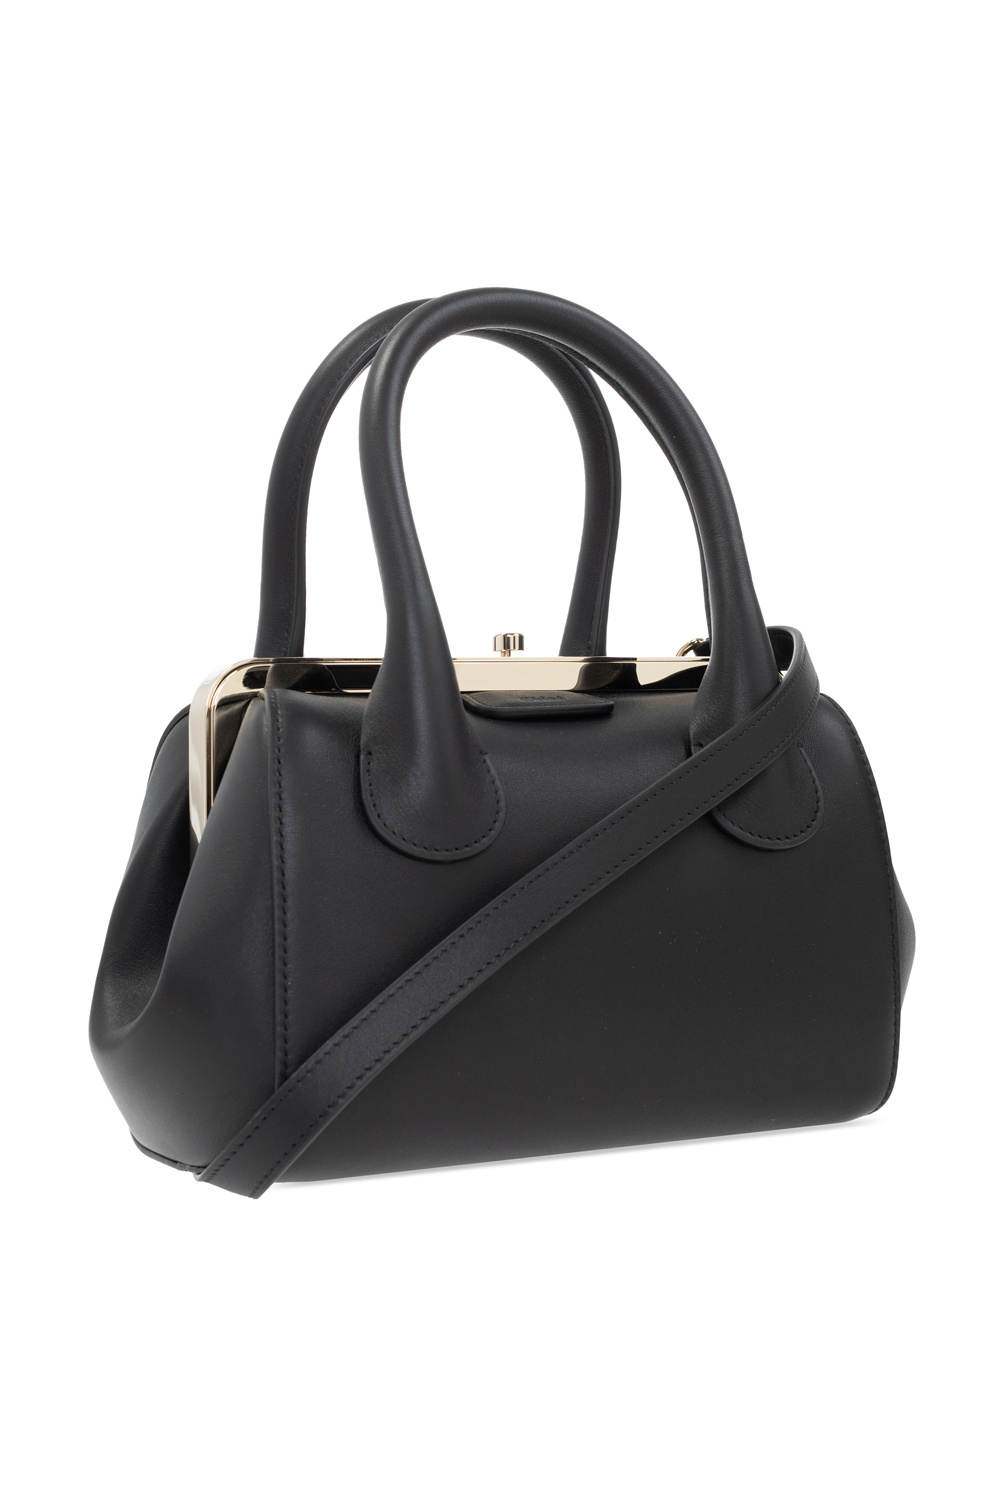 Chloé 'Joyce Mini' shoulder bag, Women's Bags